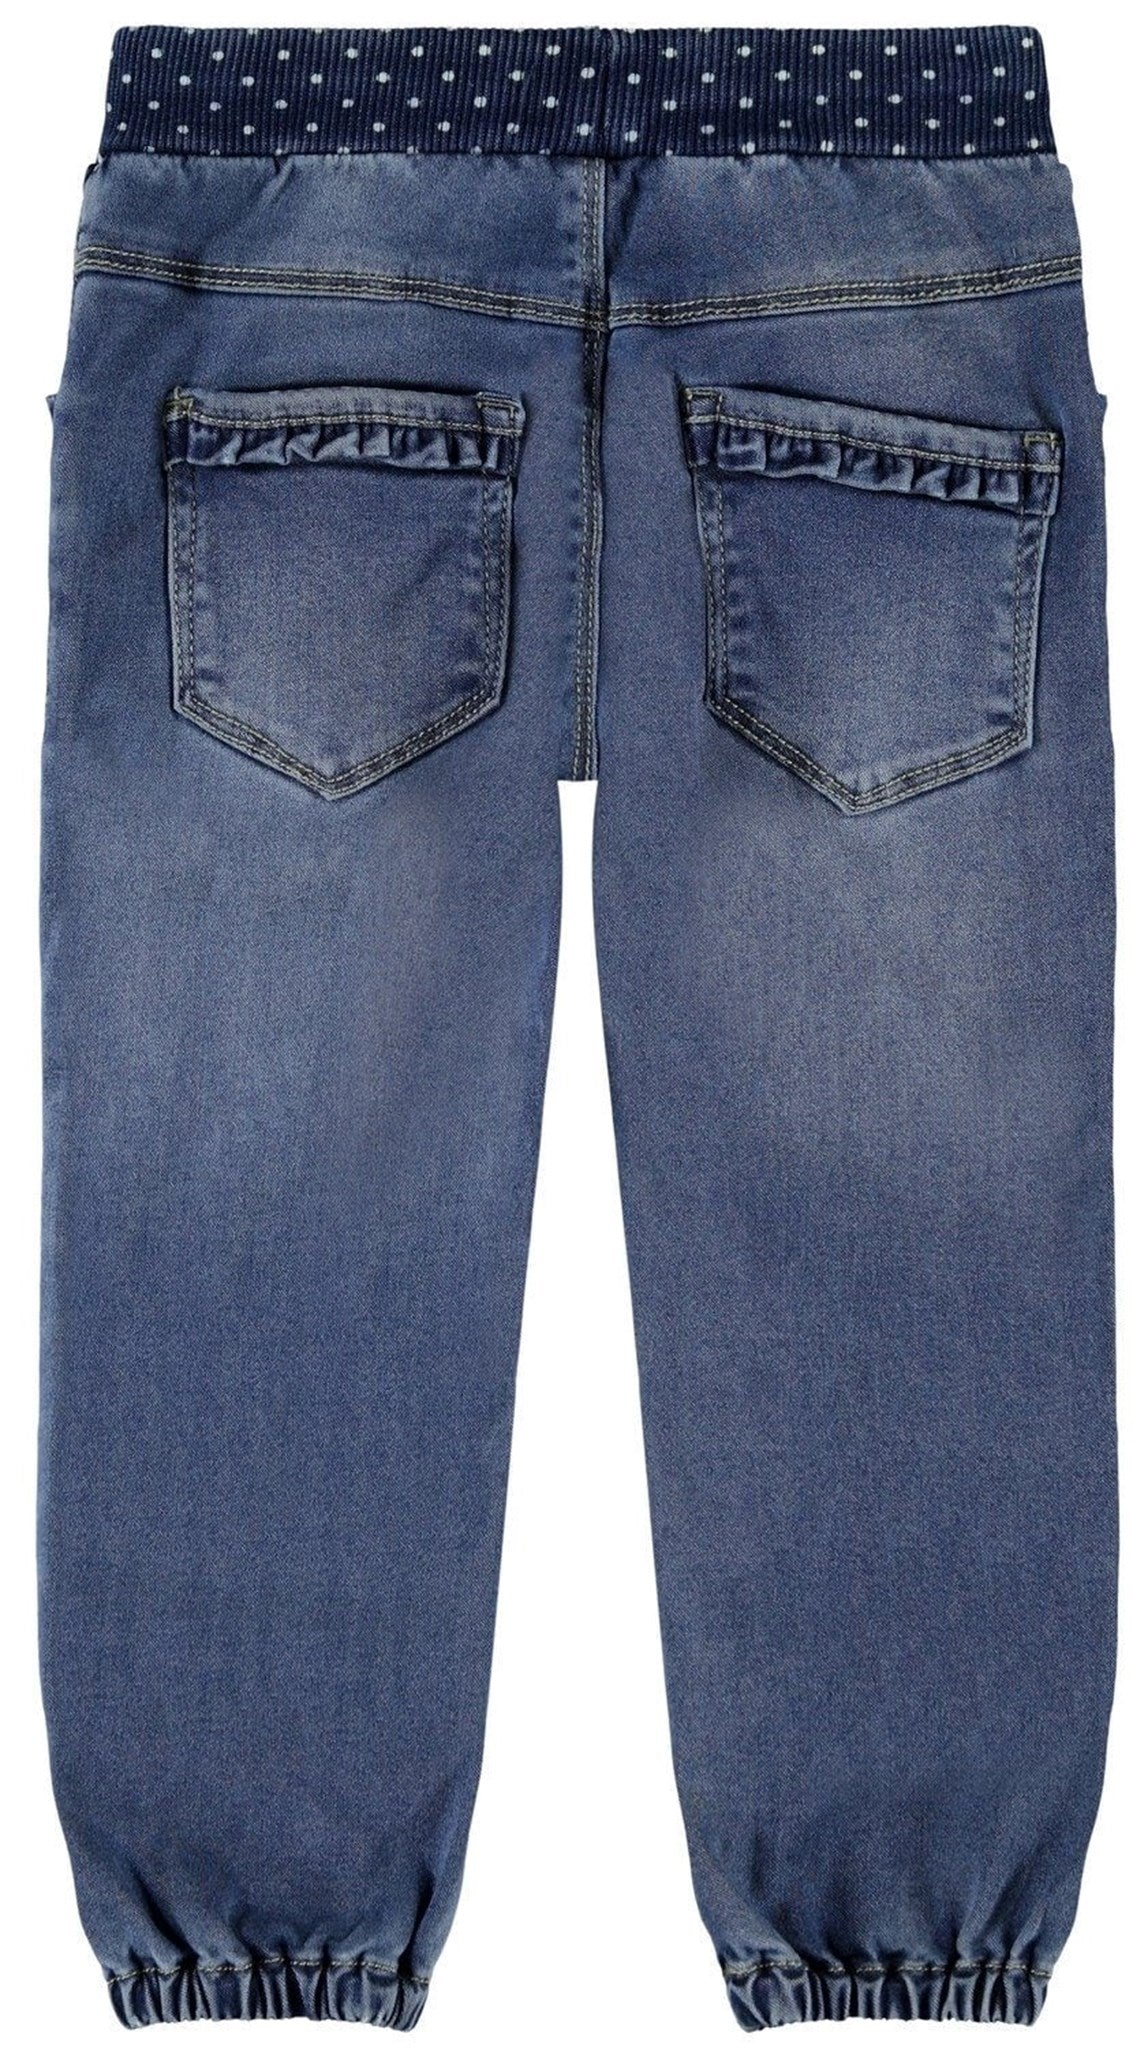 Bibi jeans - Blue denim - Name It - Blue 2